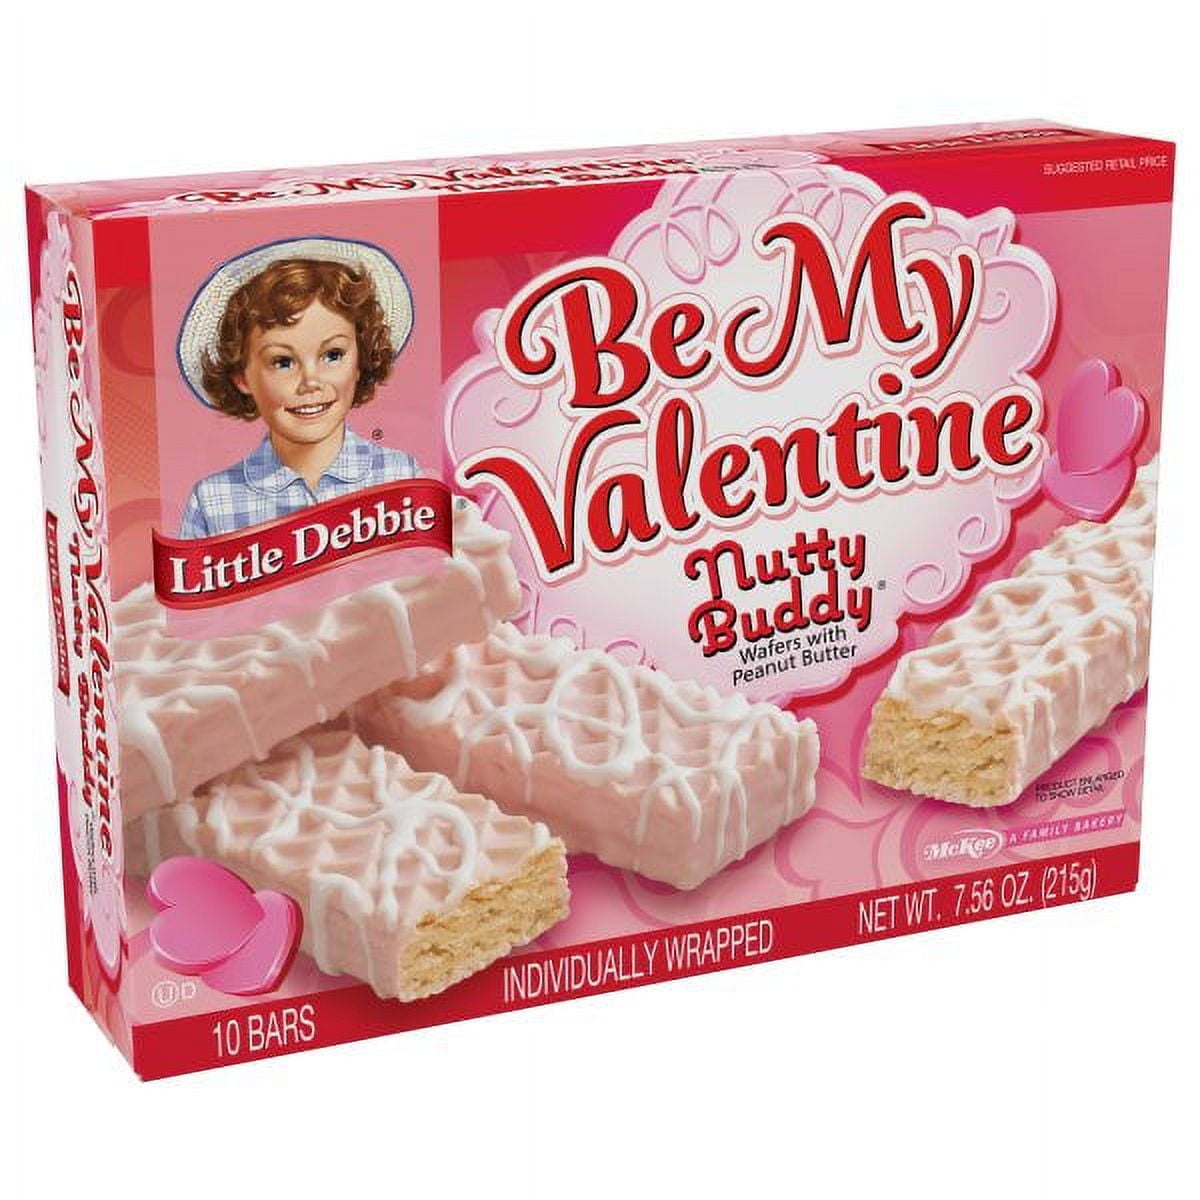 Little Debbies Little Debbie Be My Valentine Nutty Bars